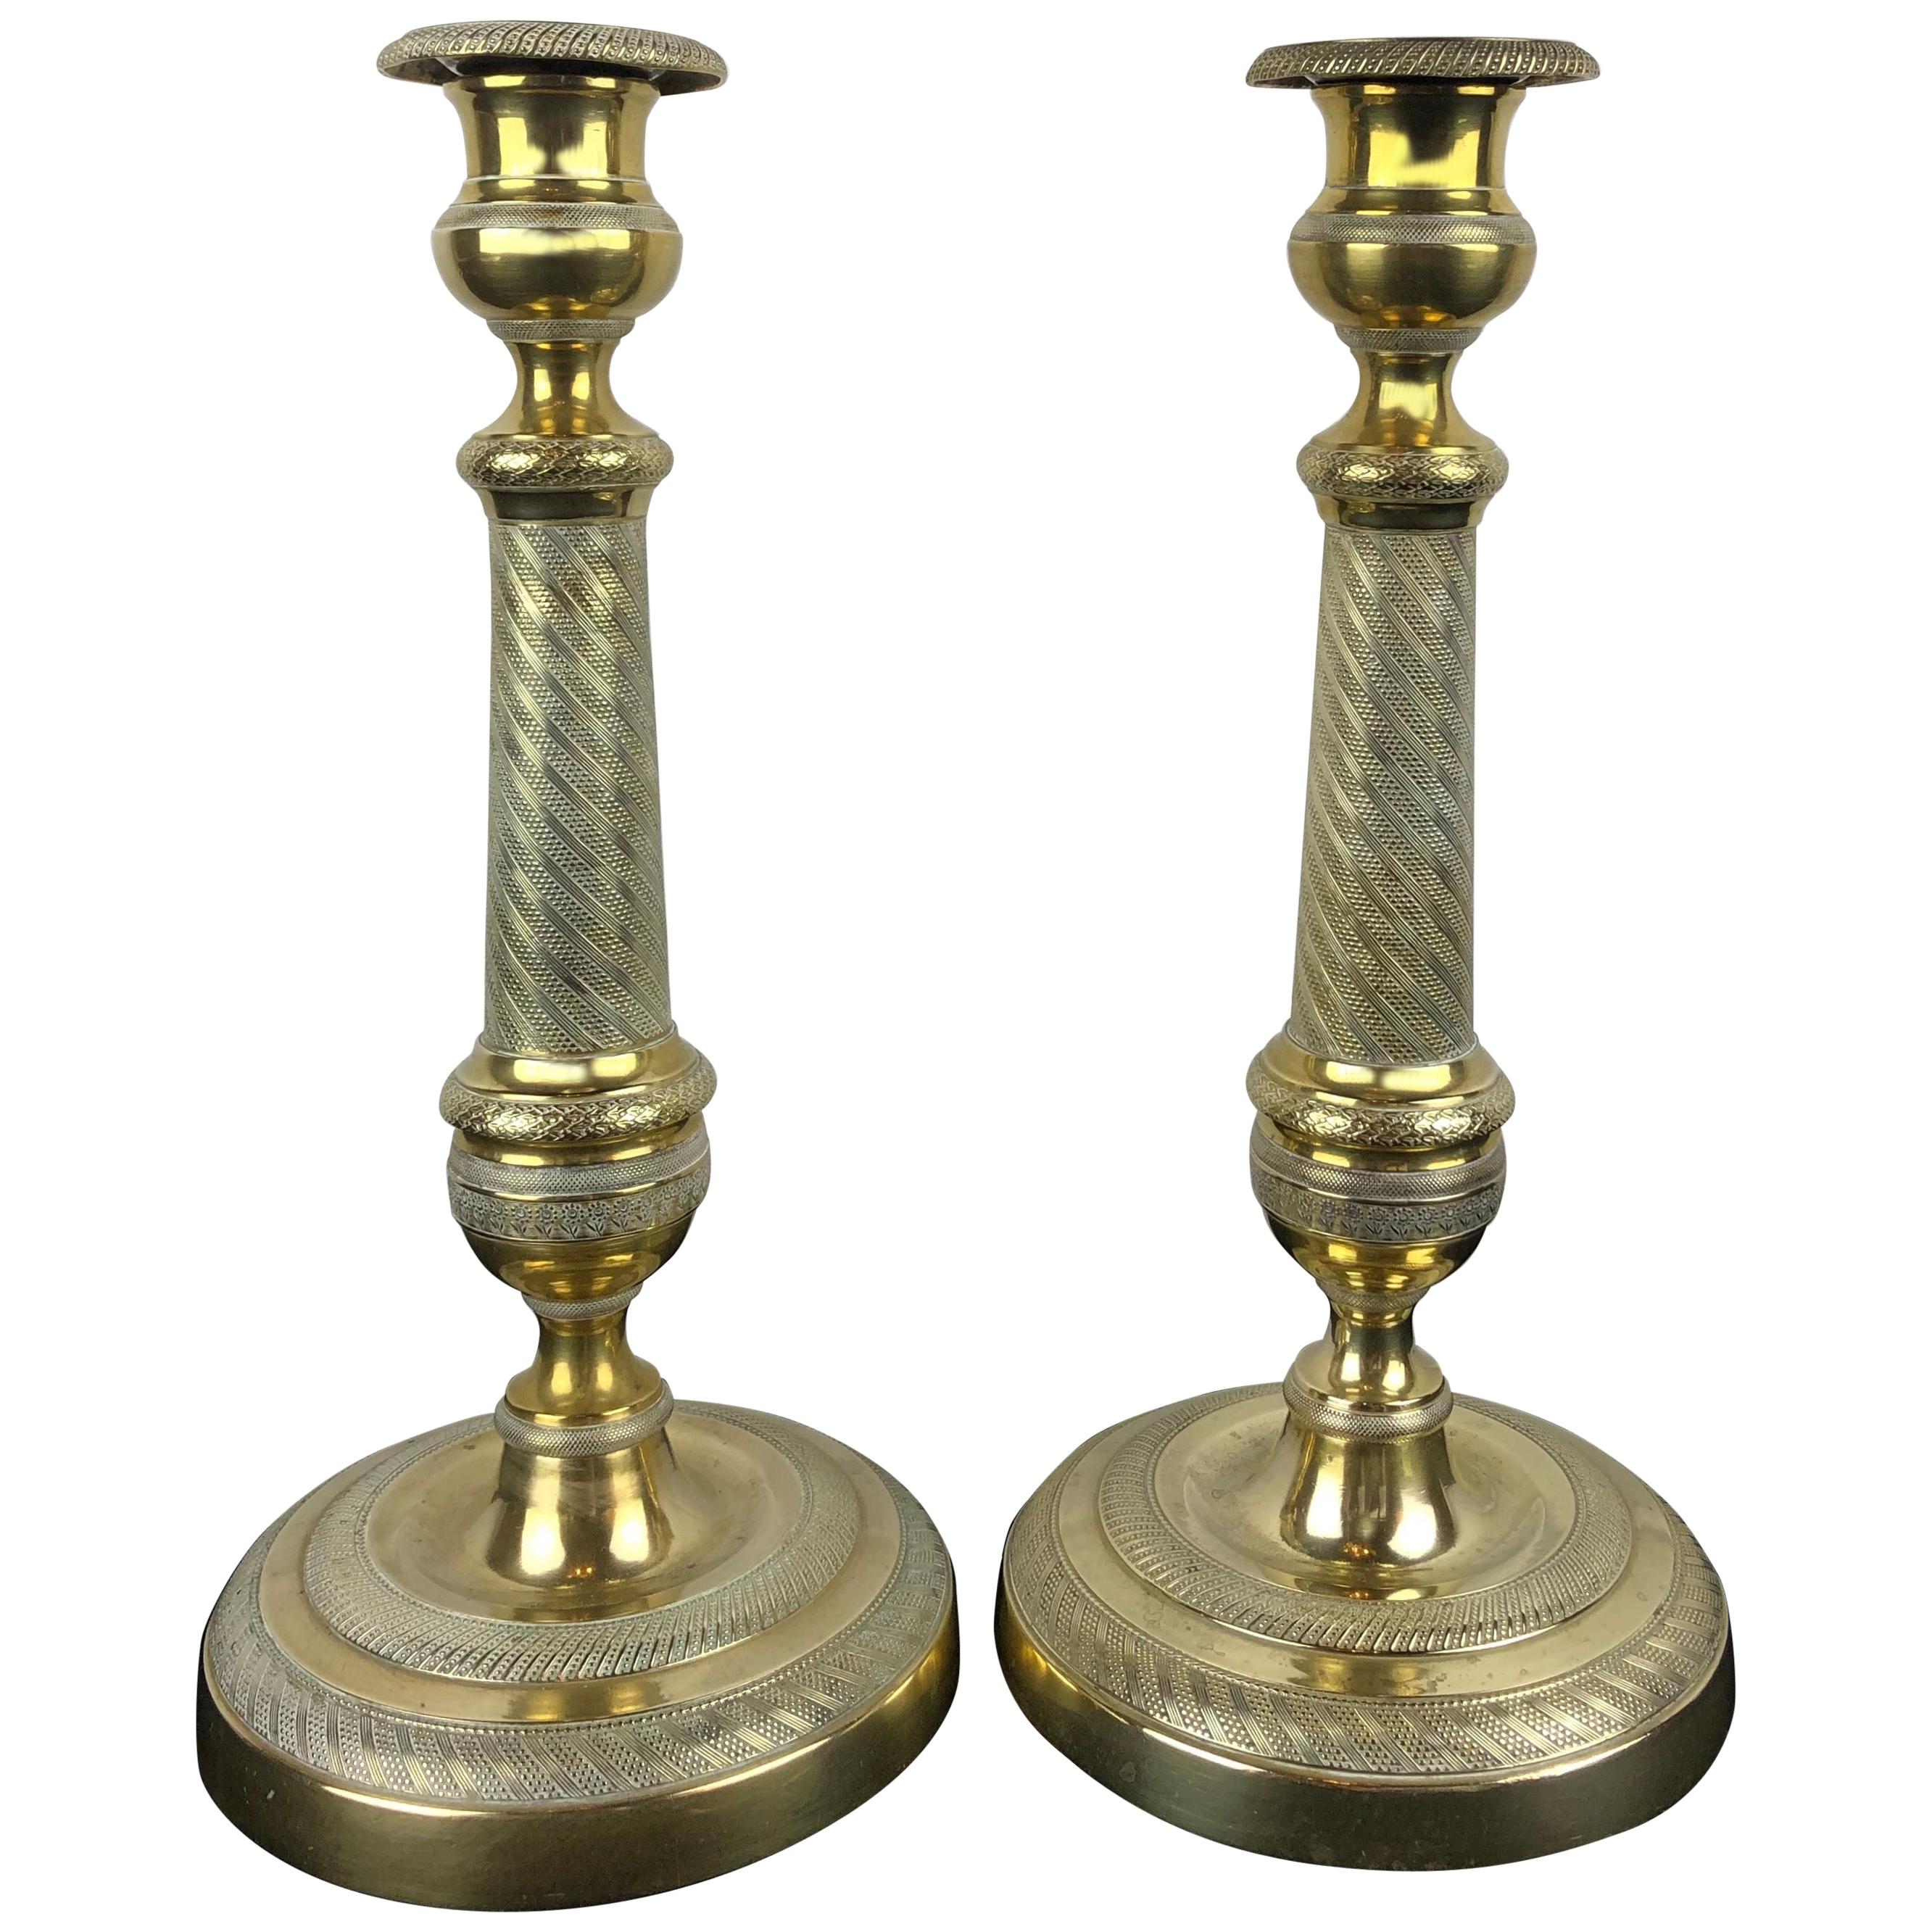 Fine Pair of Early 19th Century Empire Gilt Bronze Candlesticks